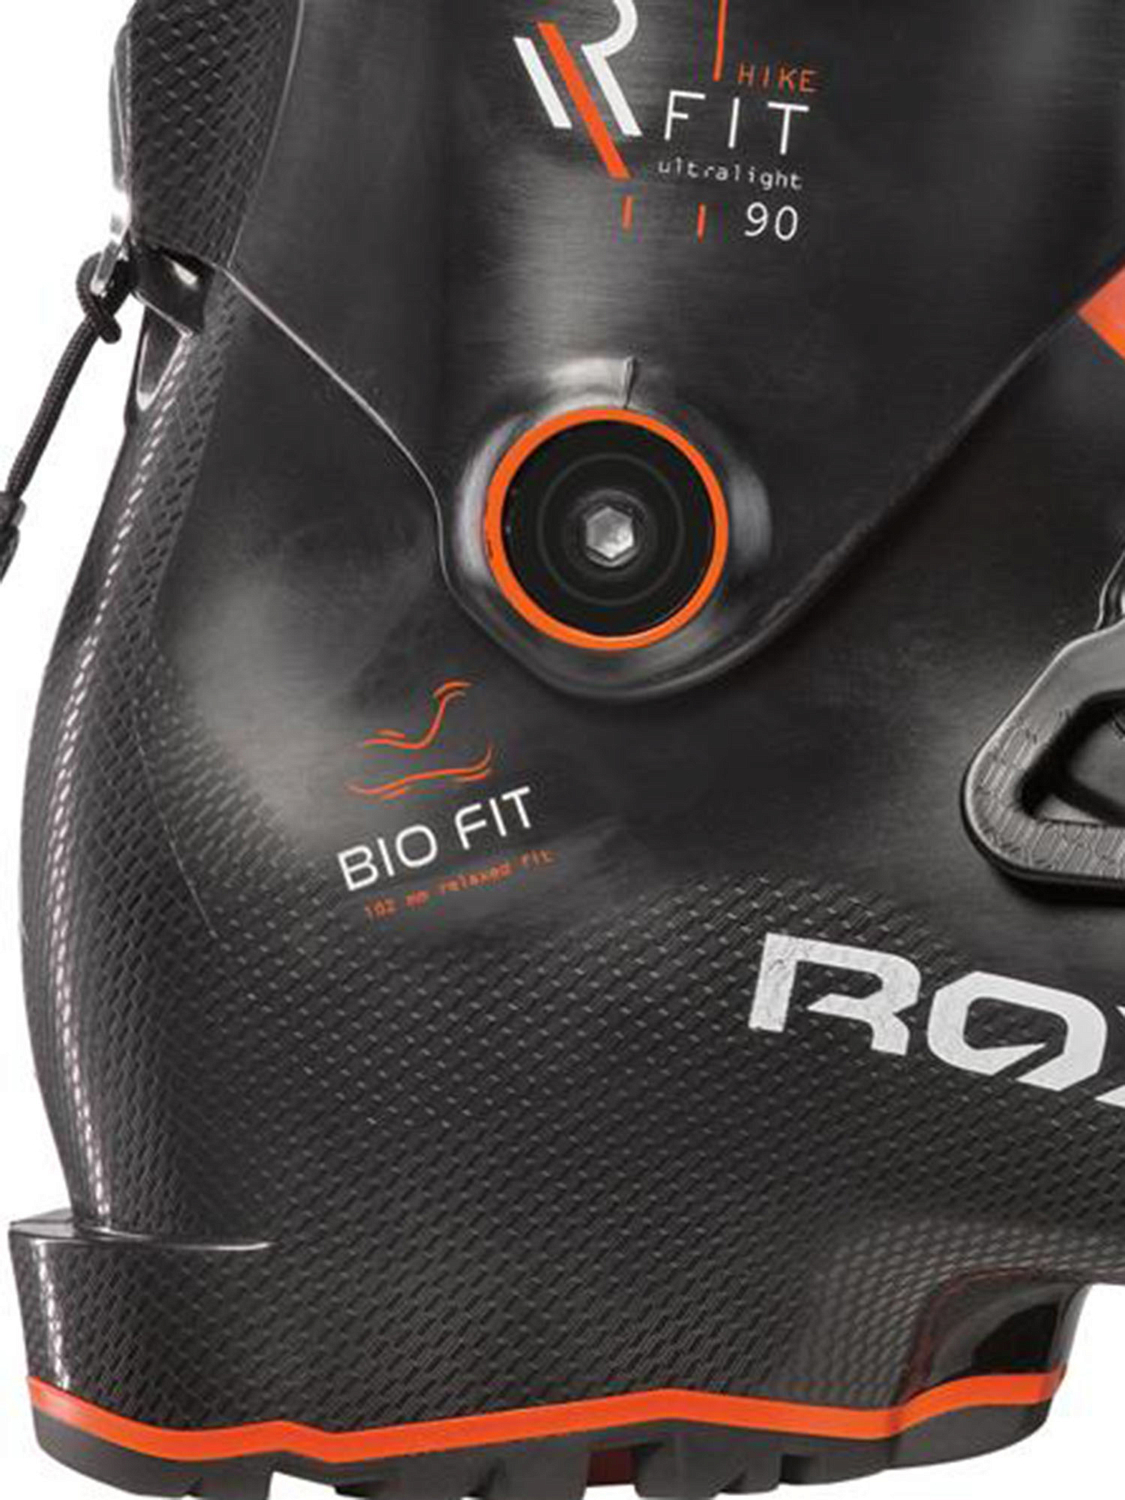 Горнолыжные ботинки ROXA RFIT Hike 90 Alpine Black/Black